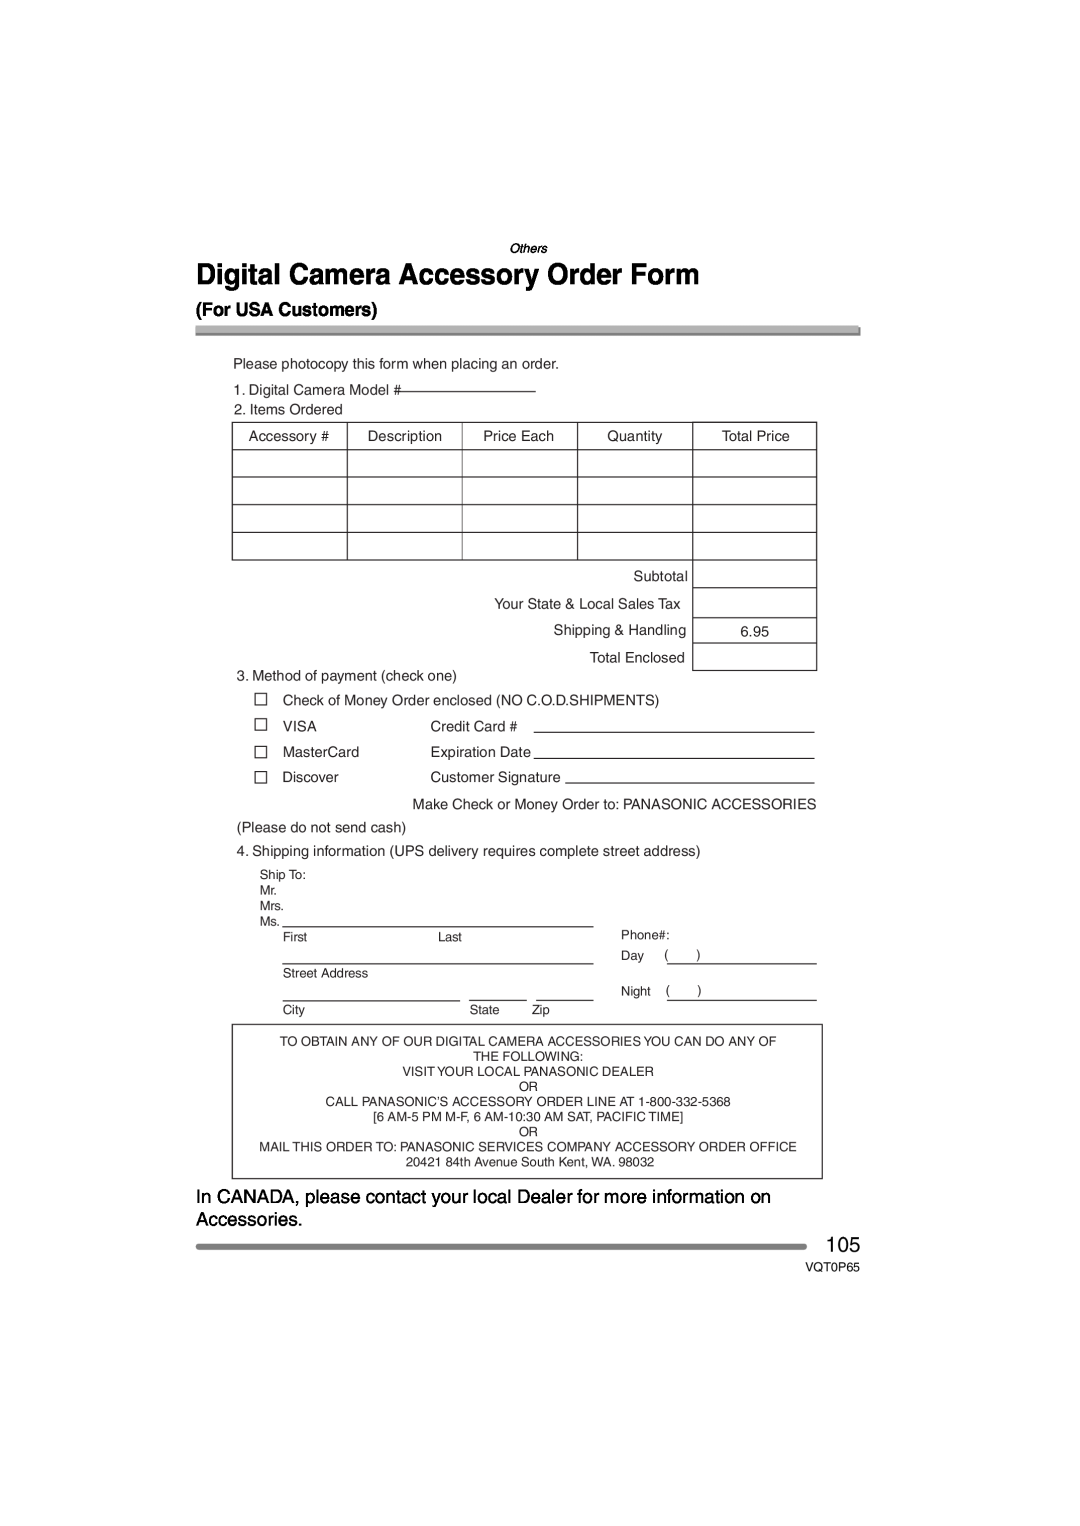 Panasonic DMC-LZ1PP, DMC-LZ2PP operating instructions Digital Camera Accessory Order Form, For USA Customers 